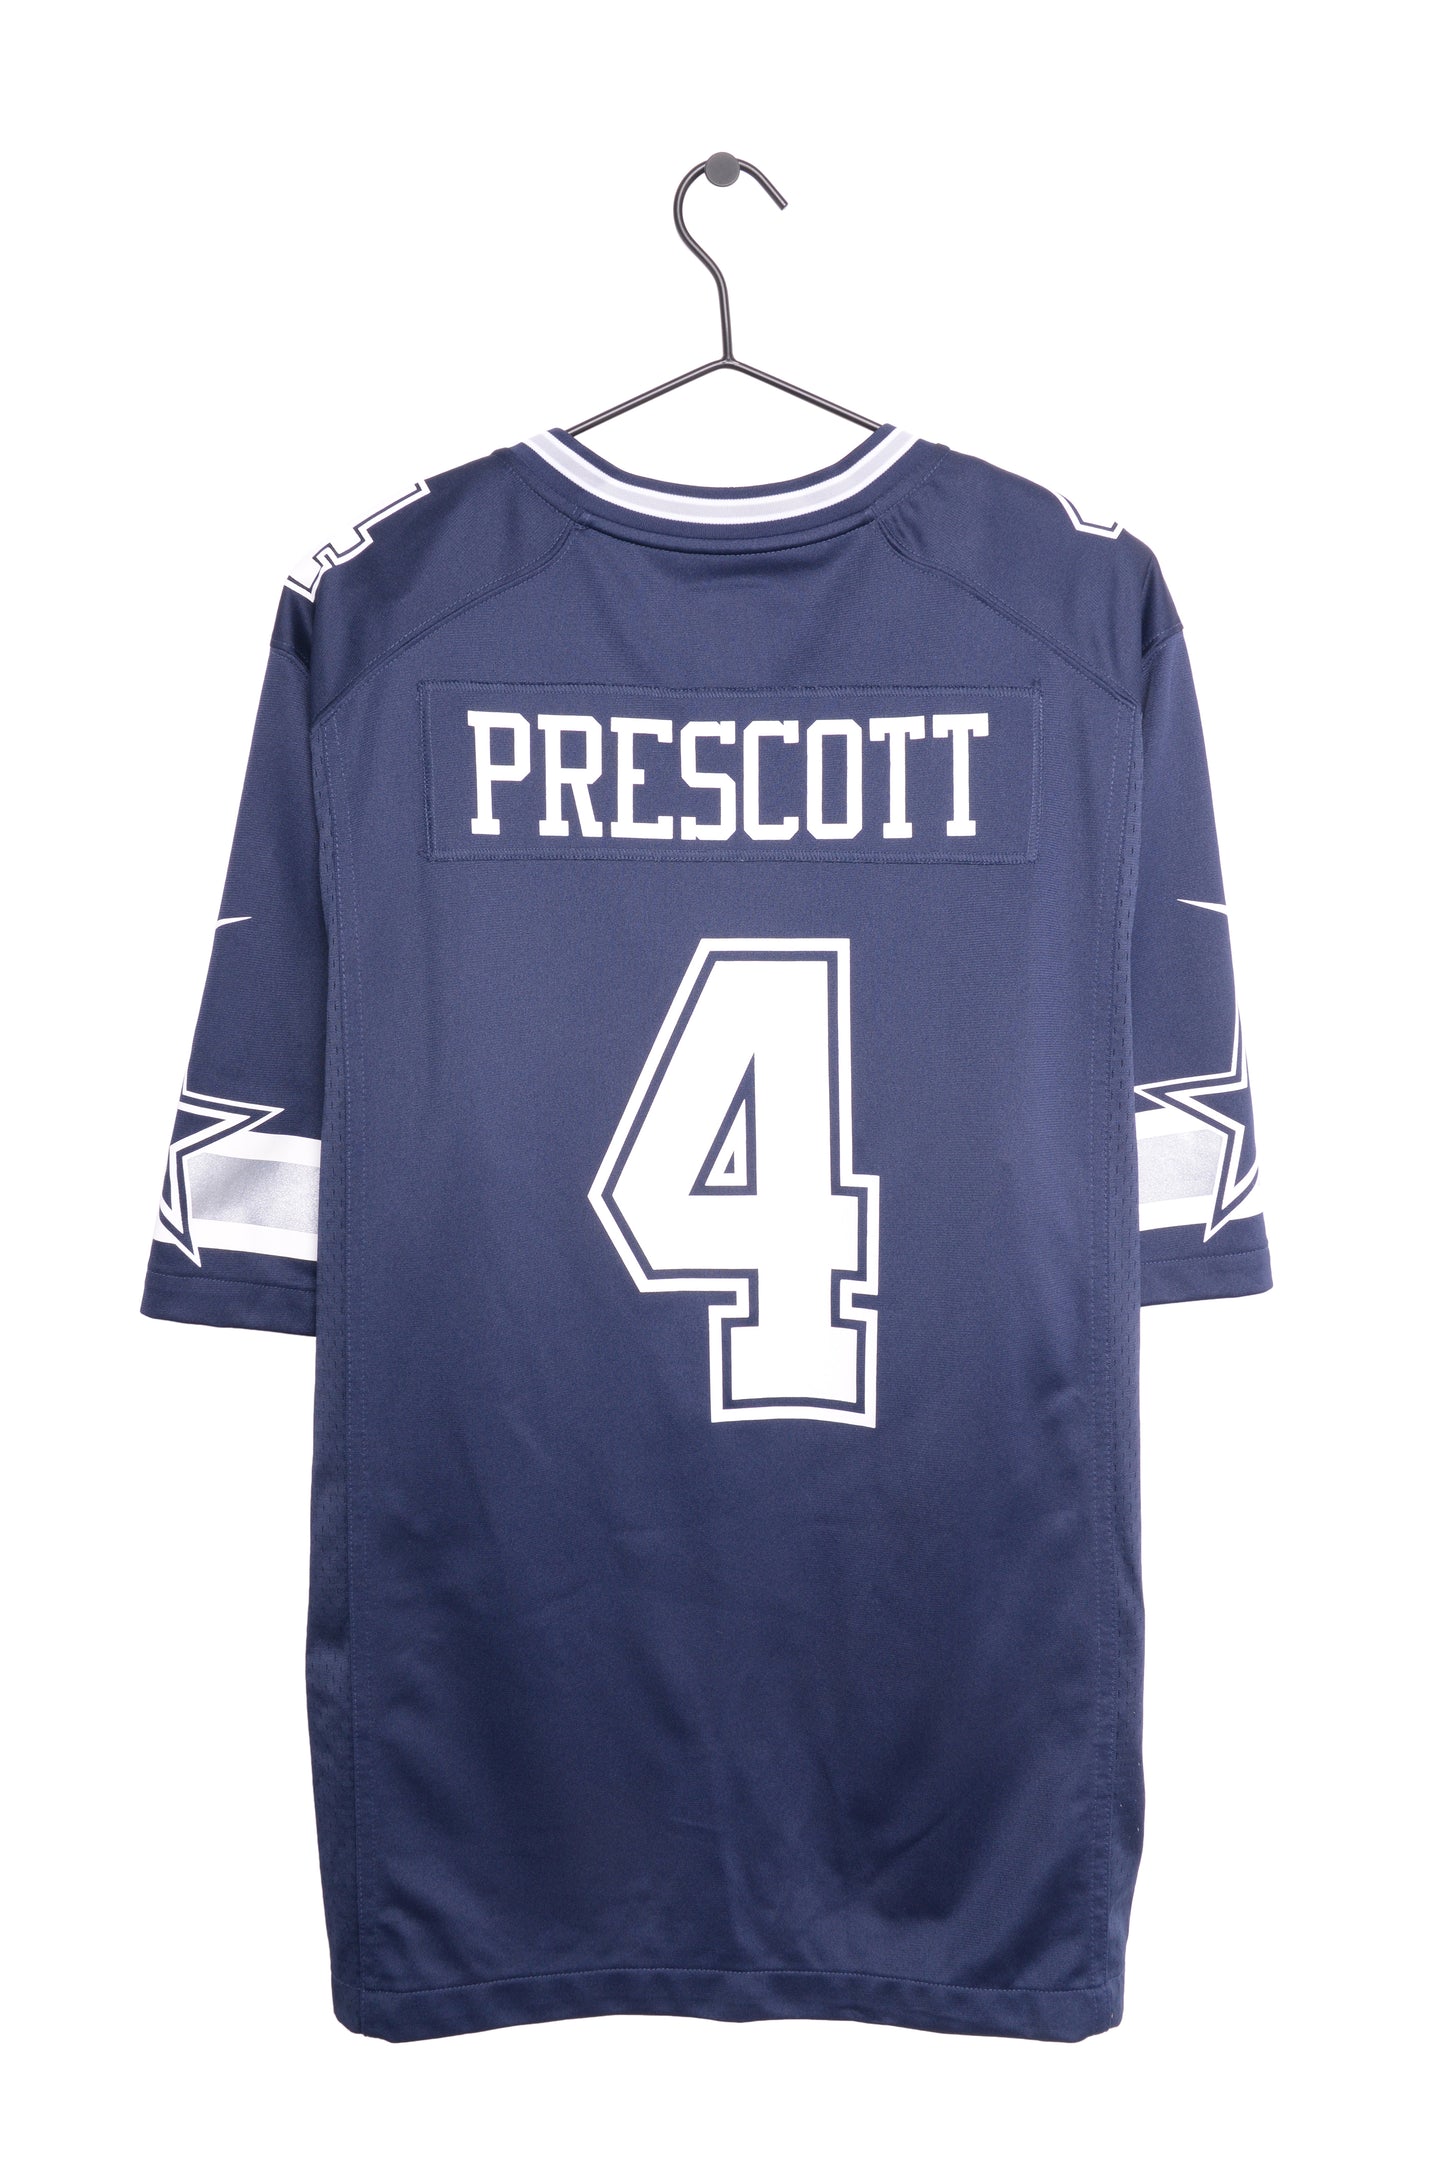 Nike Dallas Cowboys Prescott Jersey